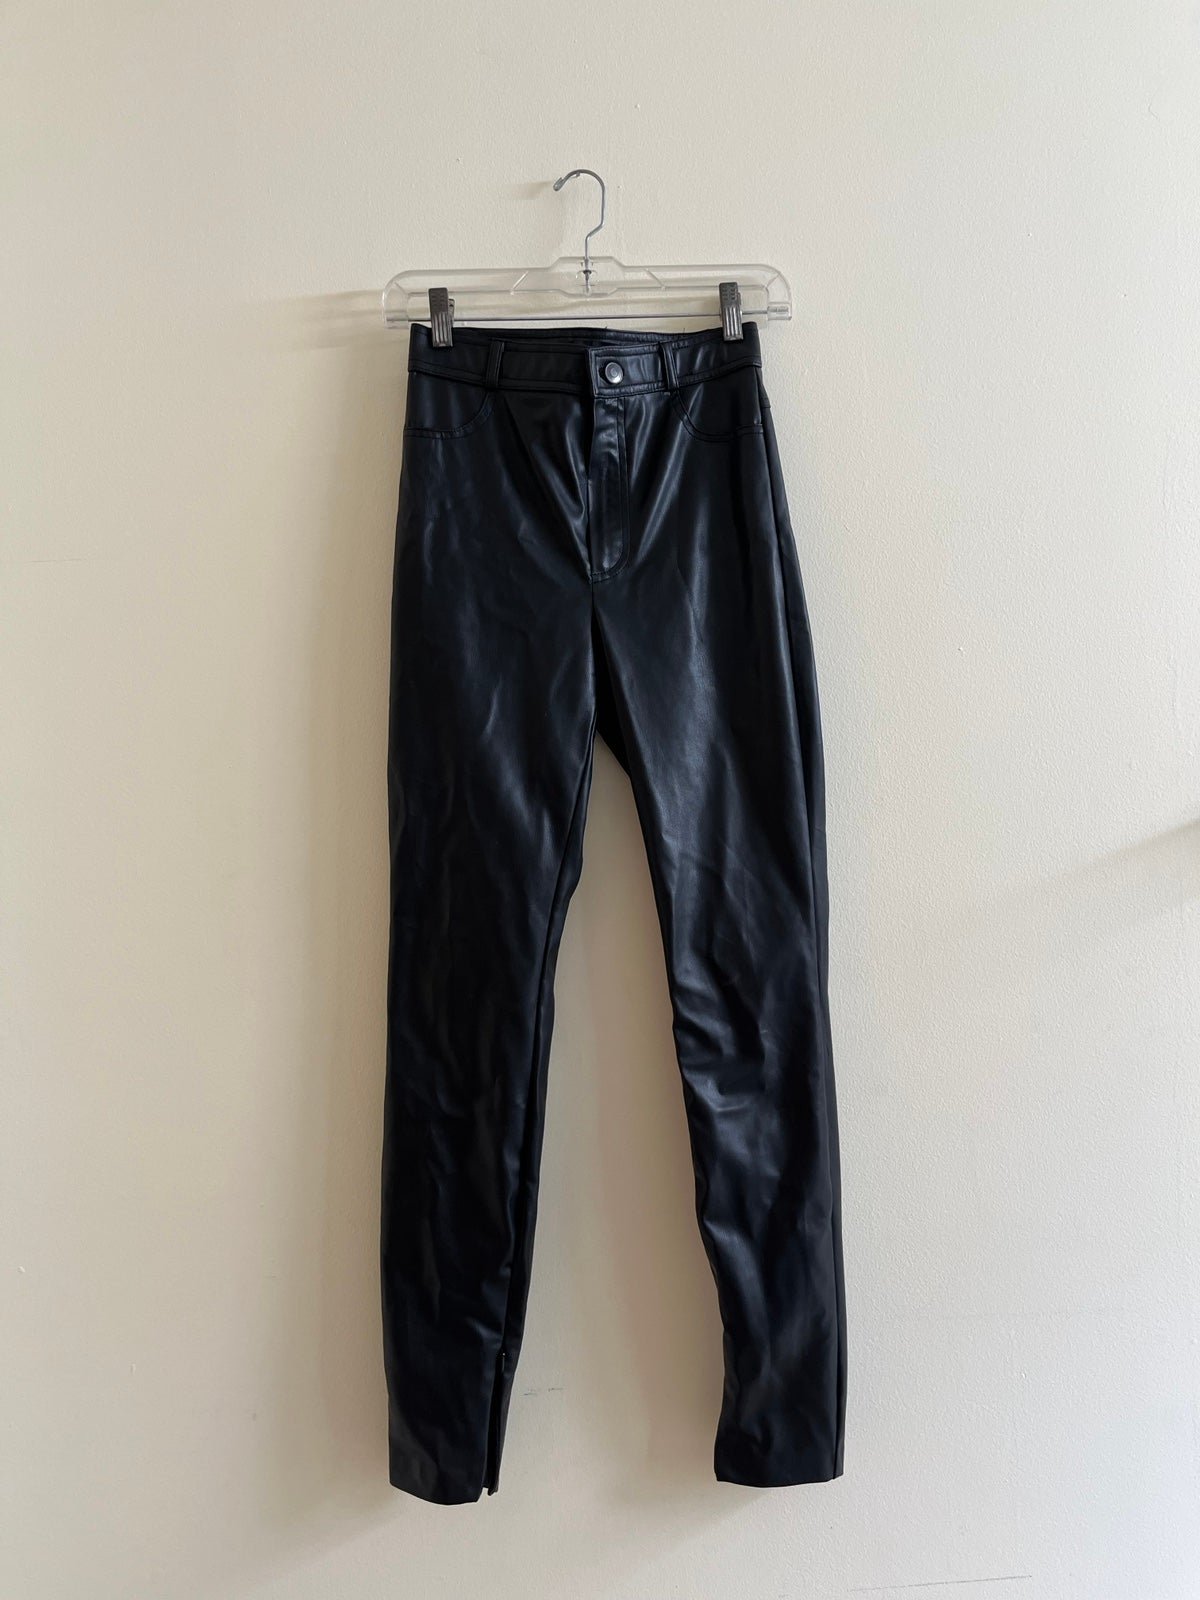 Buy Zara leather pants PEV1FPTff Factory Price